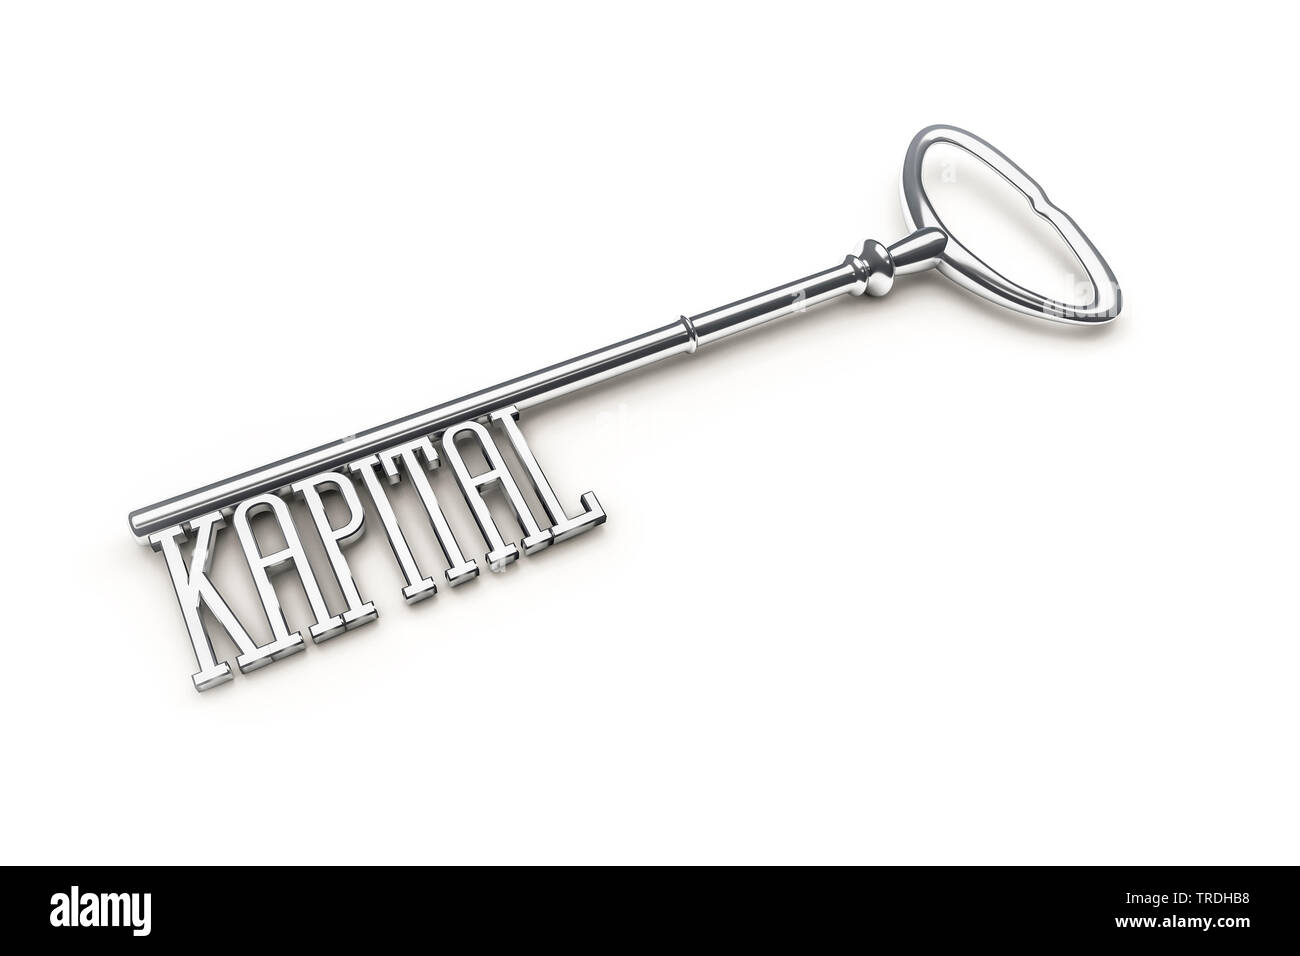 3D computer graphic, nostalgic key with lettering KAPITAL (capital) as key bit Stock Photo